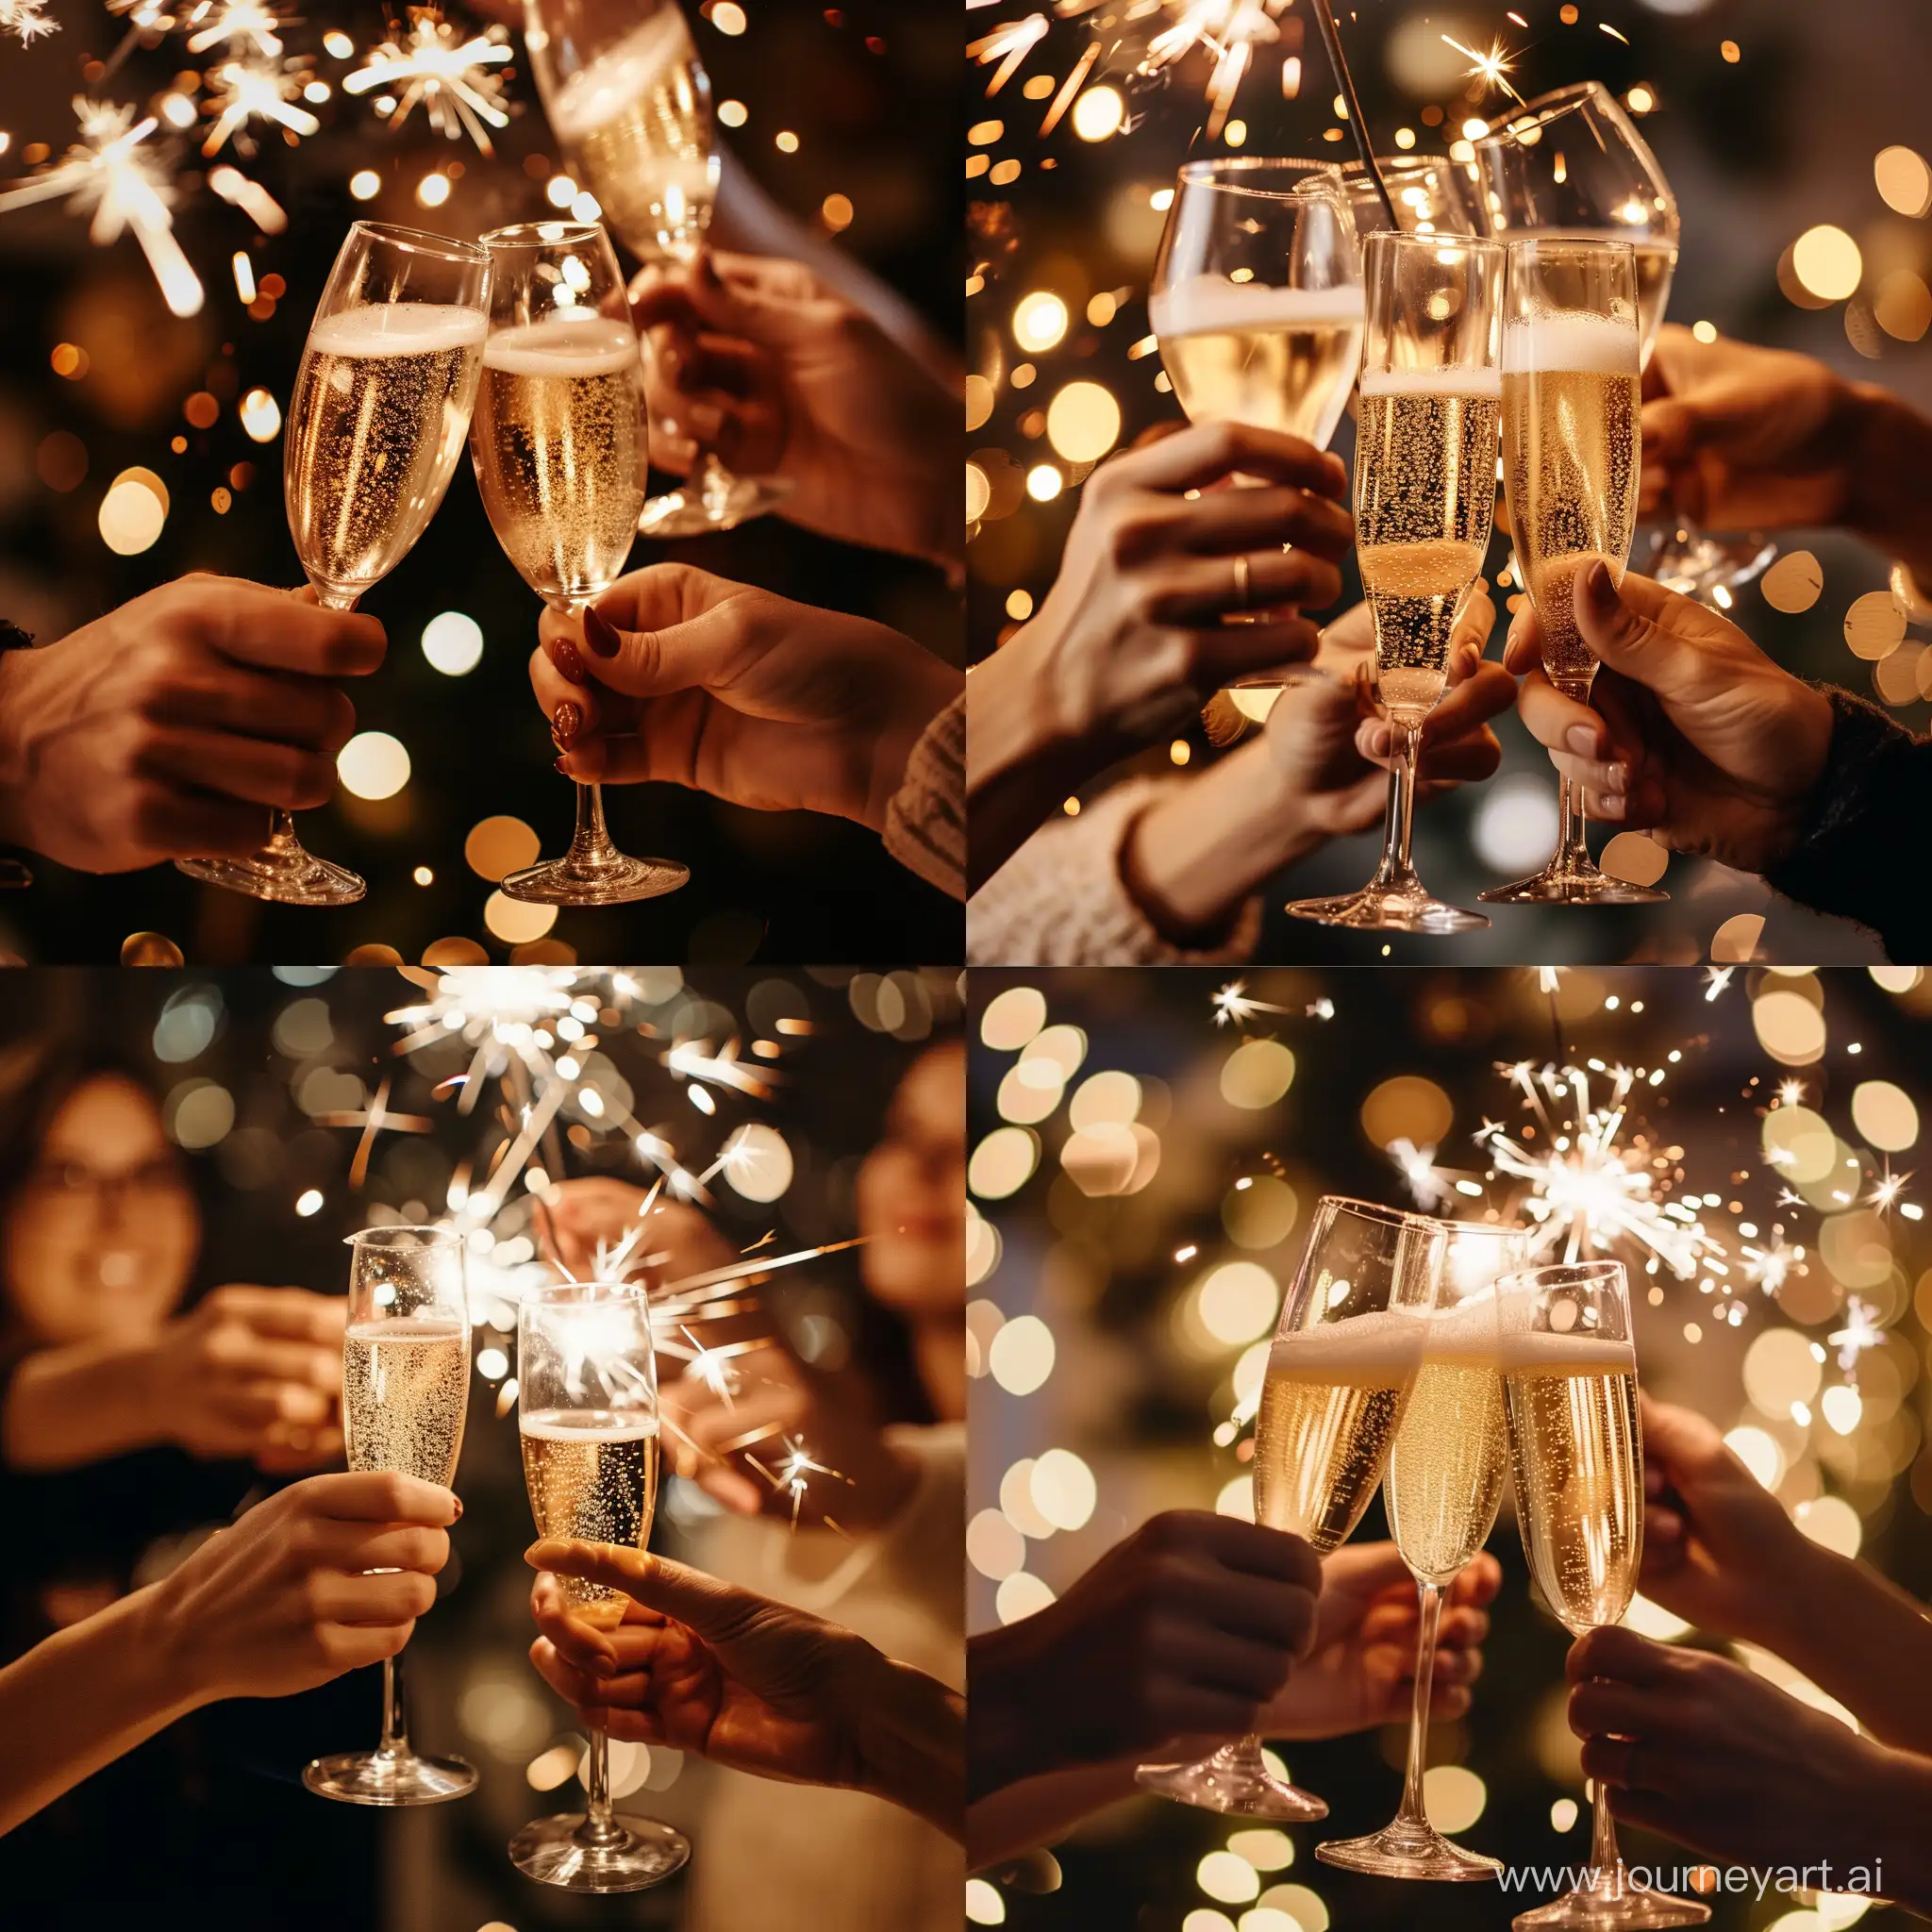 Vibrant-New-Years-Eve-Celebration-Art-with-Aspect-Ratio-11